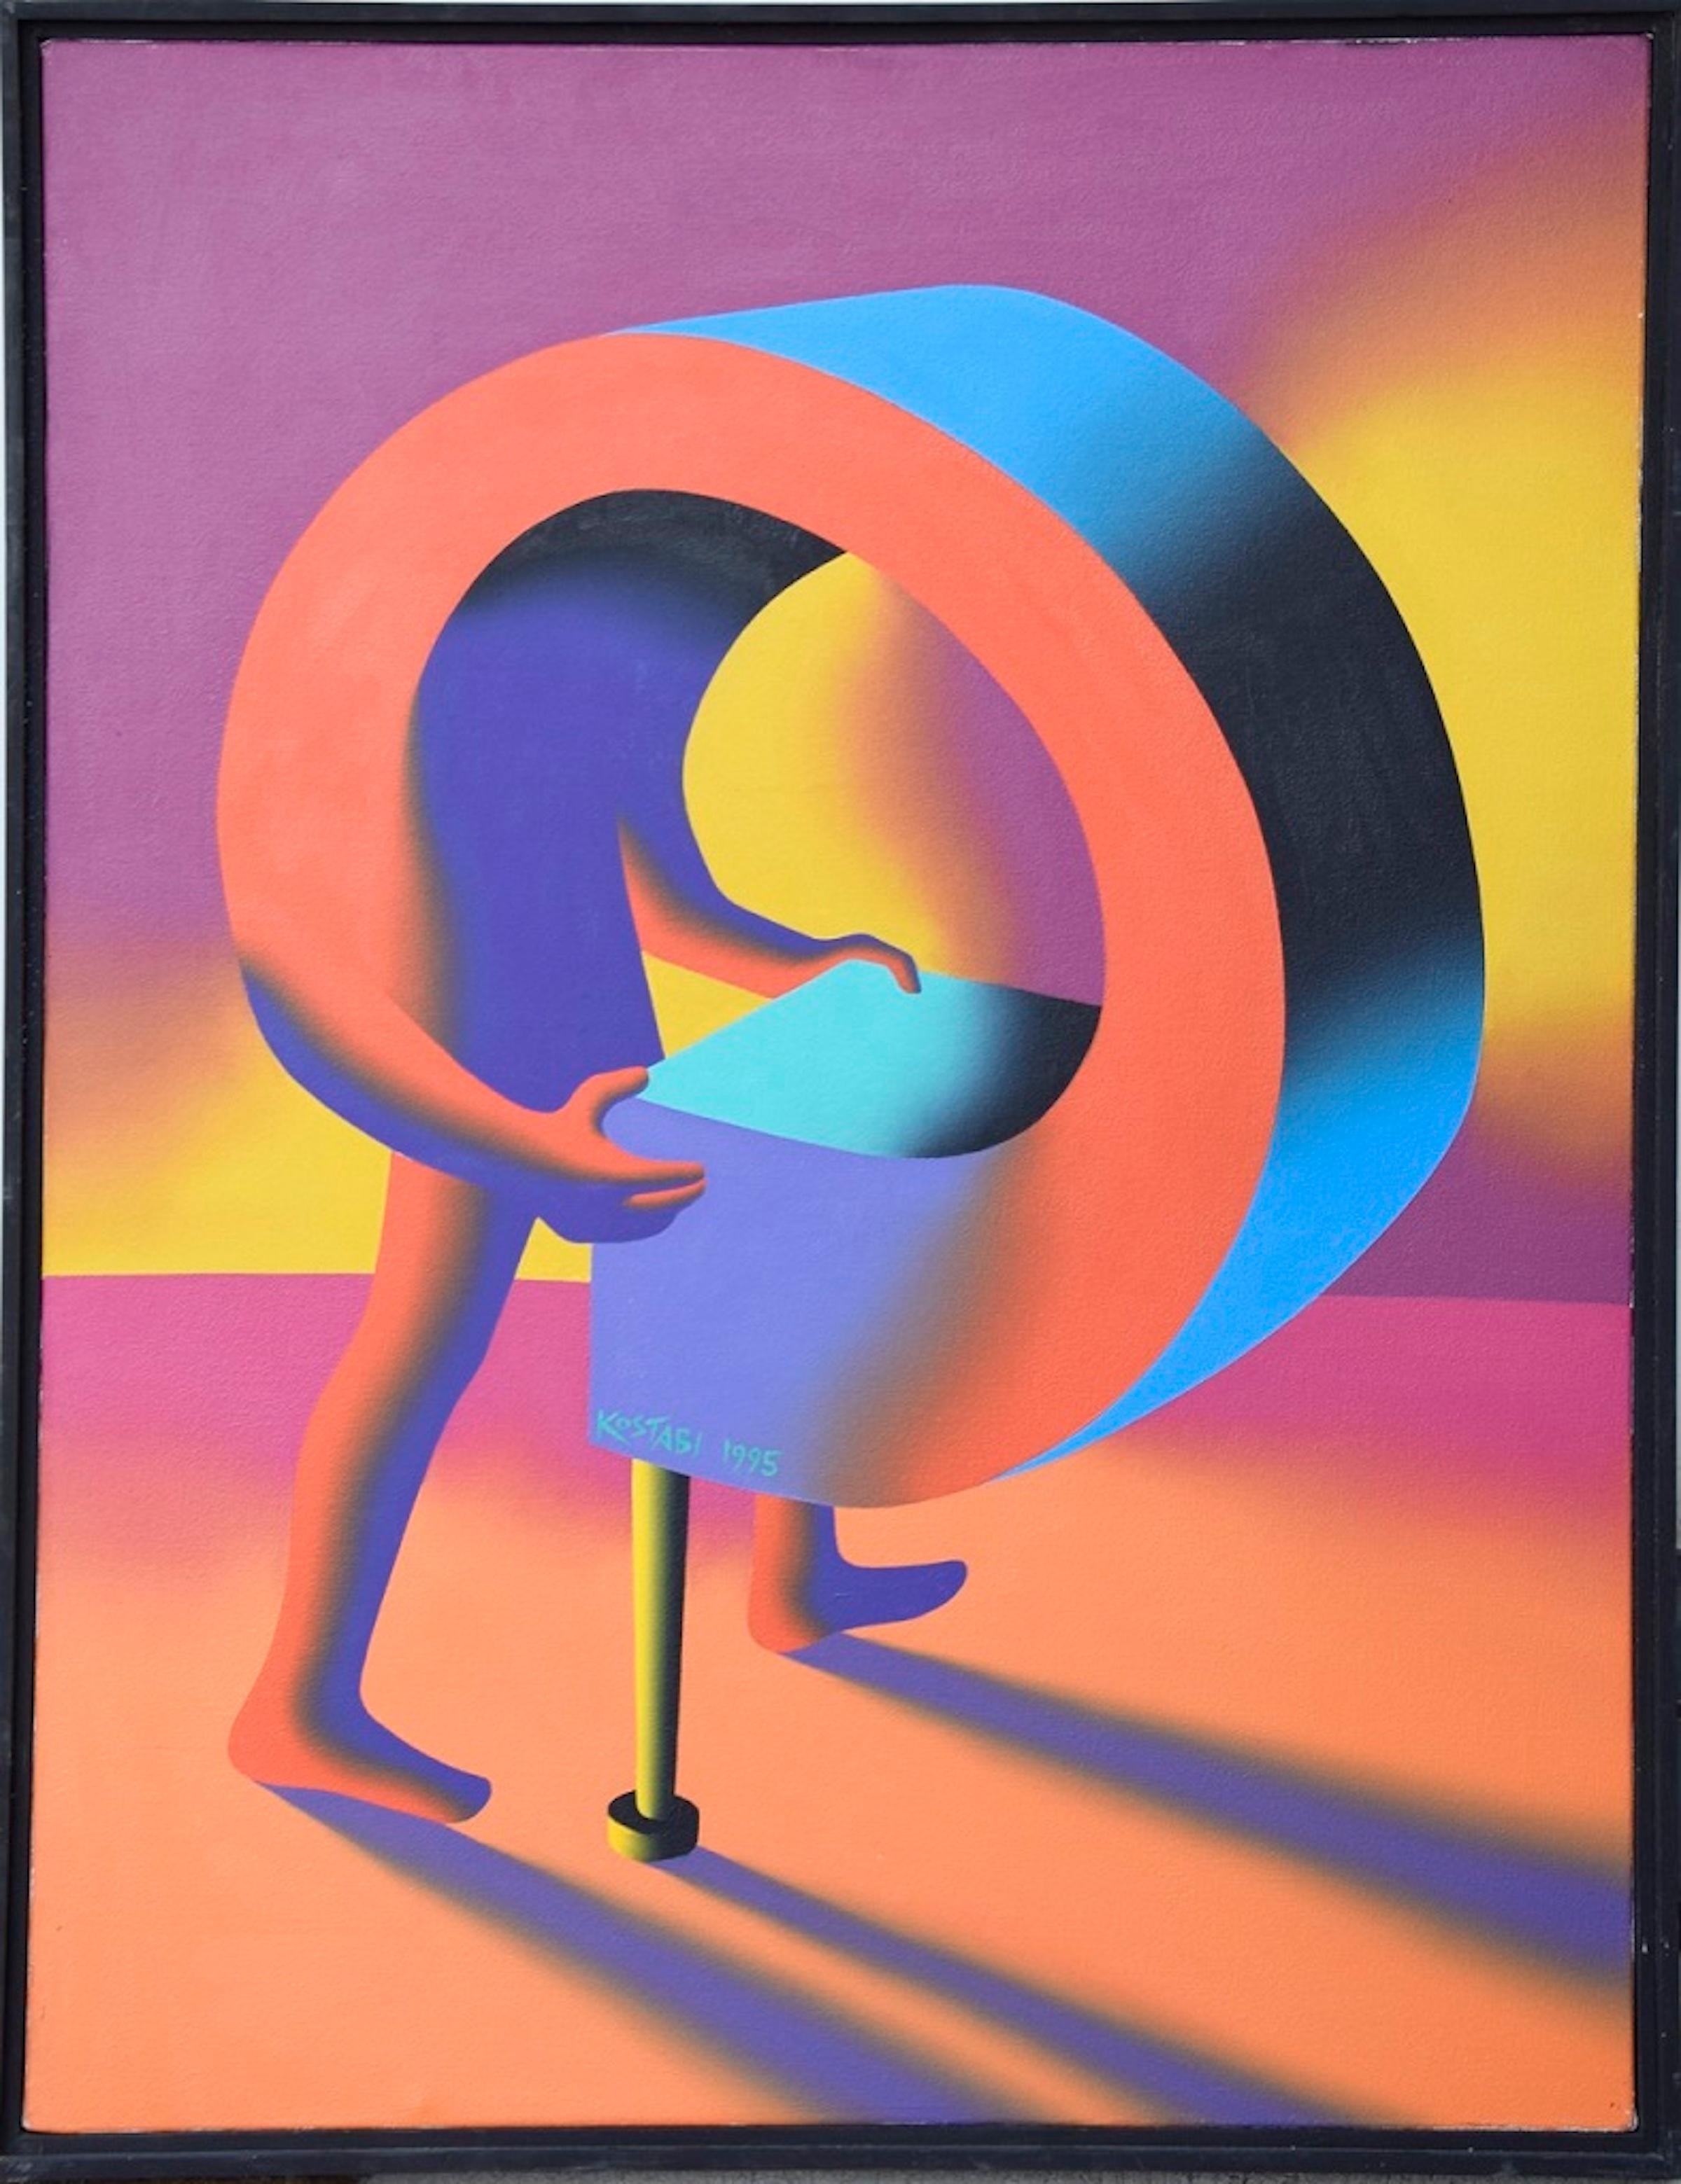 Mark Kostabi Figurative Painting - Winning Streak - Original Oil on Canvas by M. Kostabi - 1995